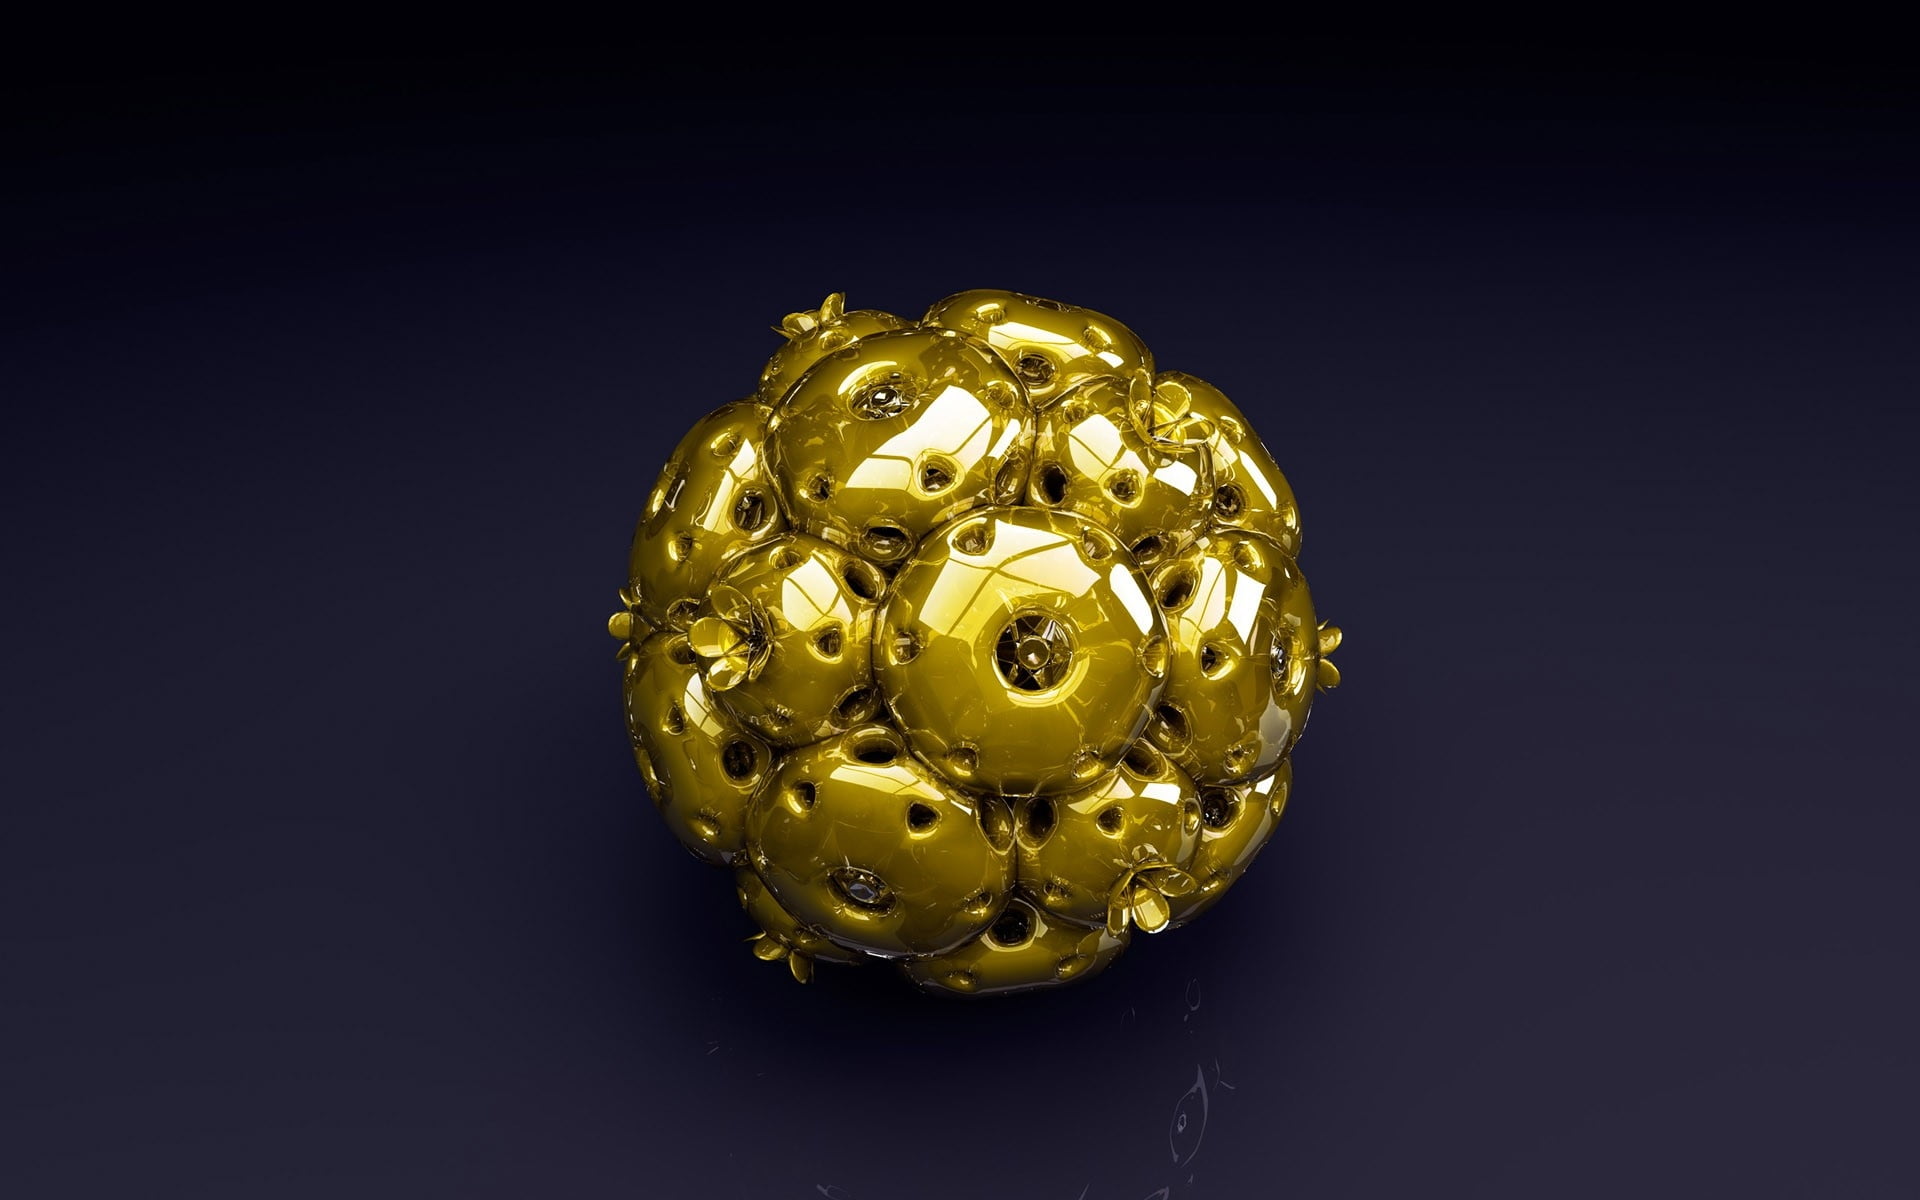 round gold-colored ball ornament